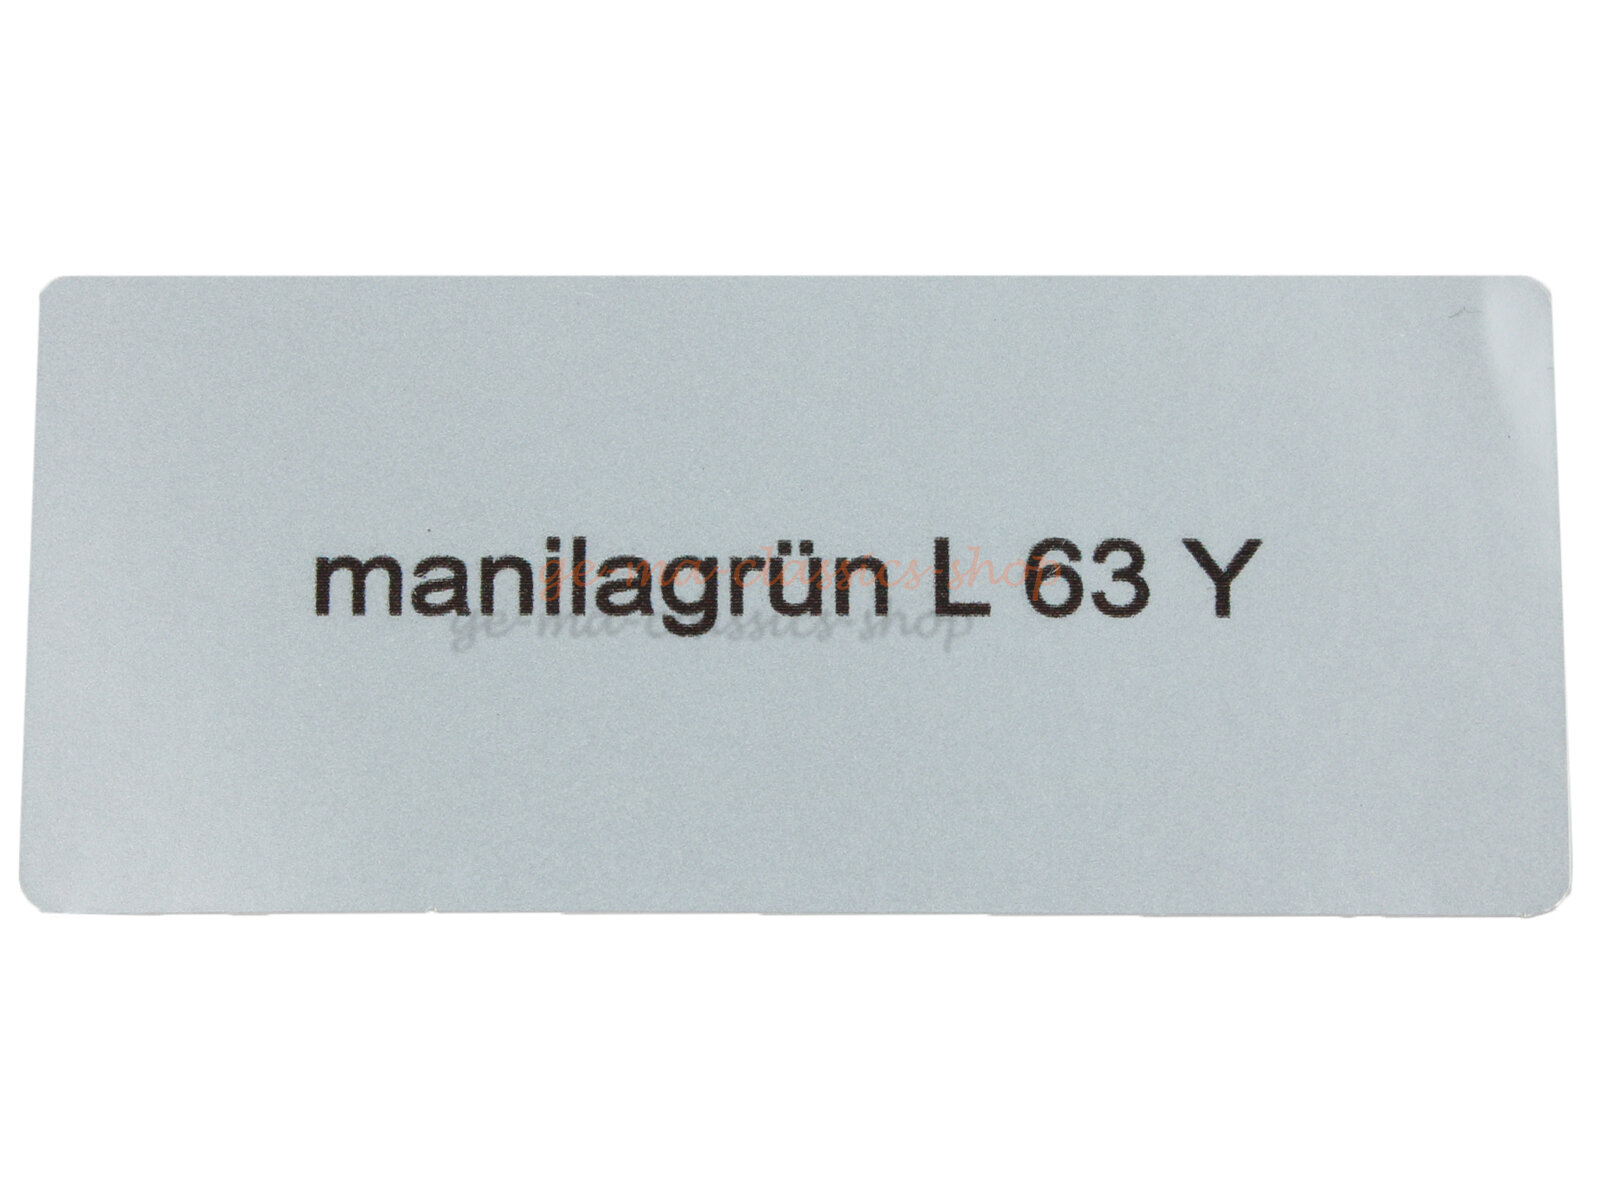 Aufkleber "manilagrün L 63 Y" Farbcode Sticker